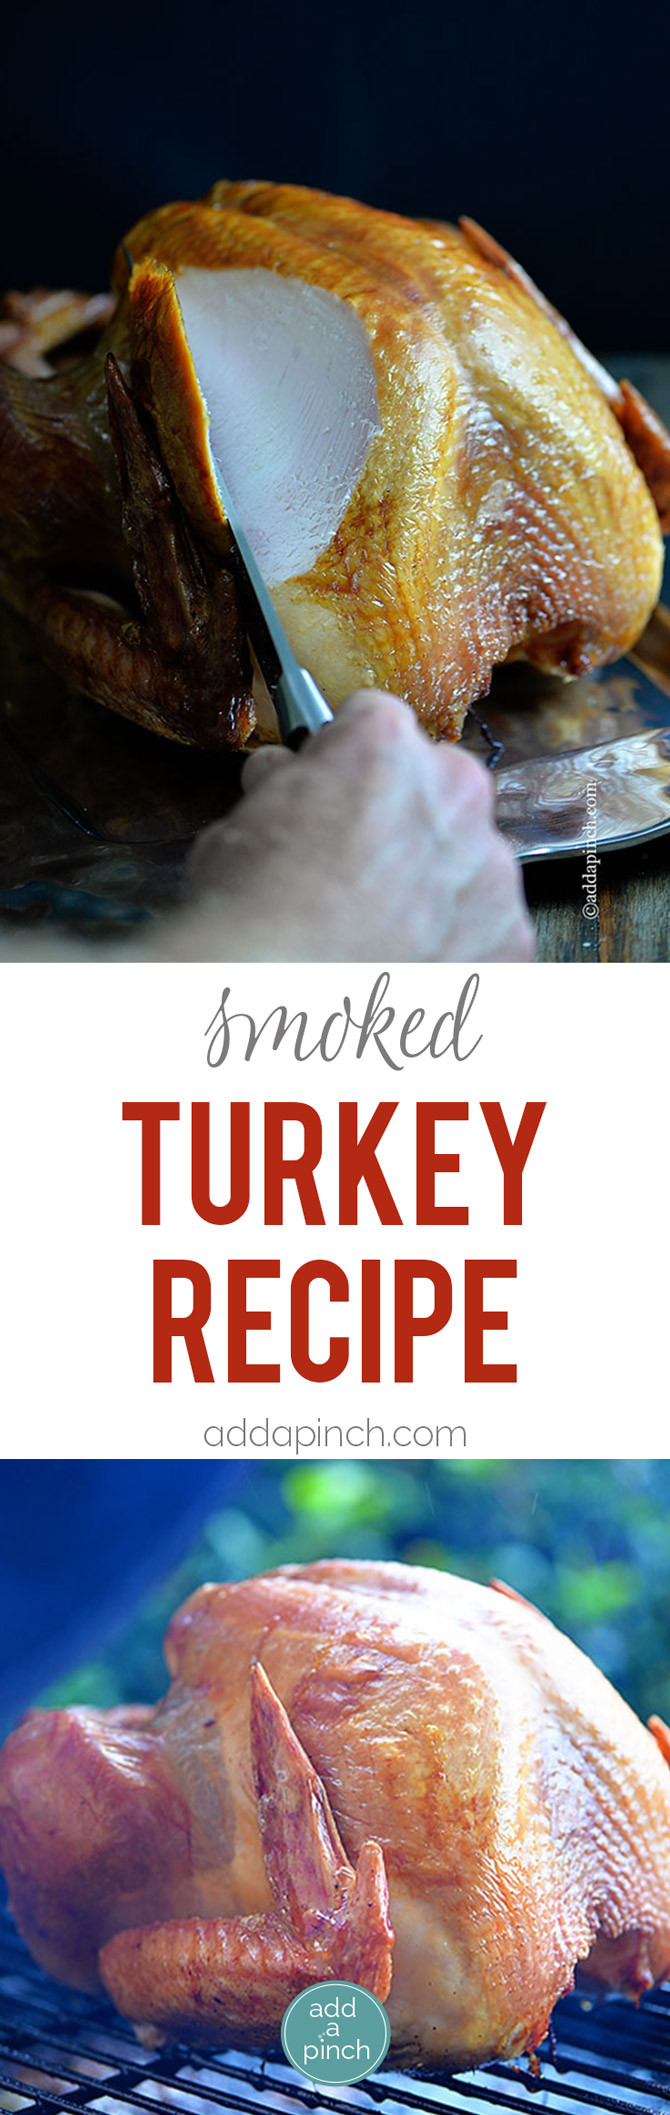 Smoked Thanksgiving Turkey Recipe
 Smoked Turkey Recipe Add a Pinch